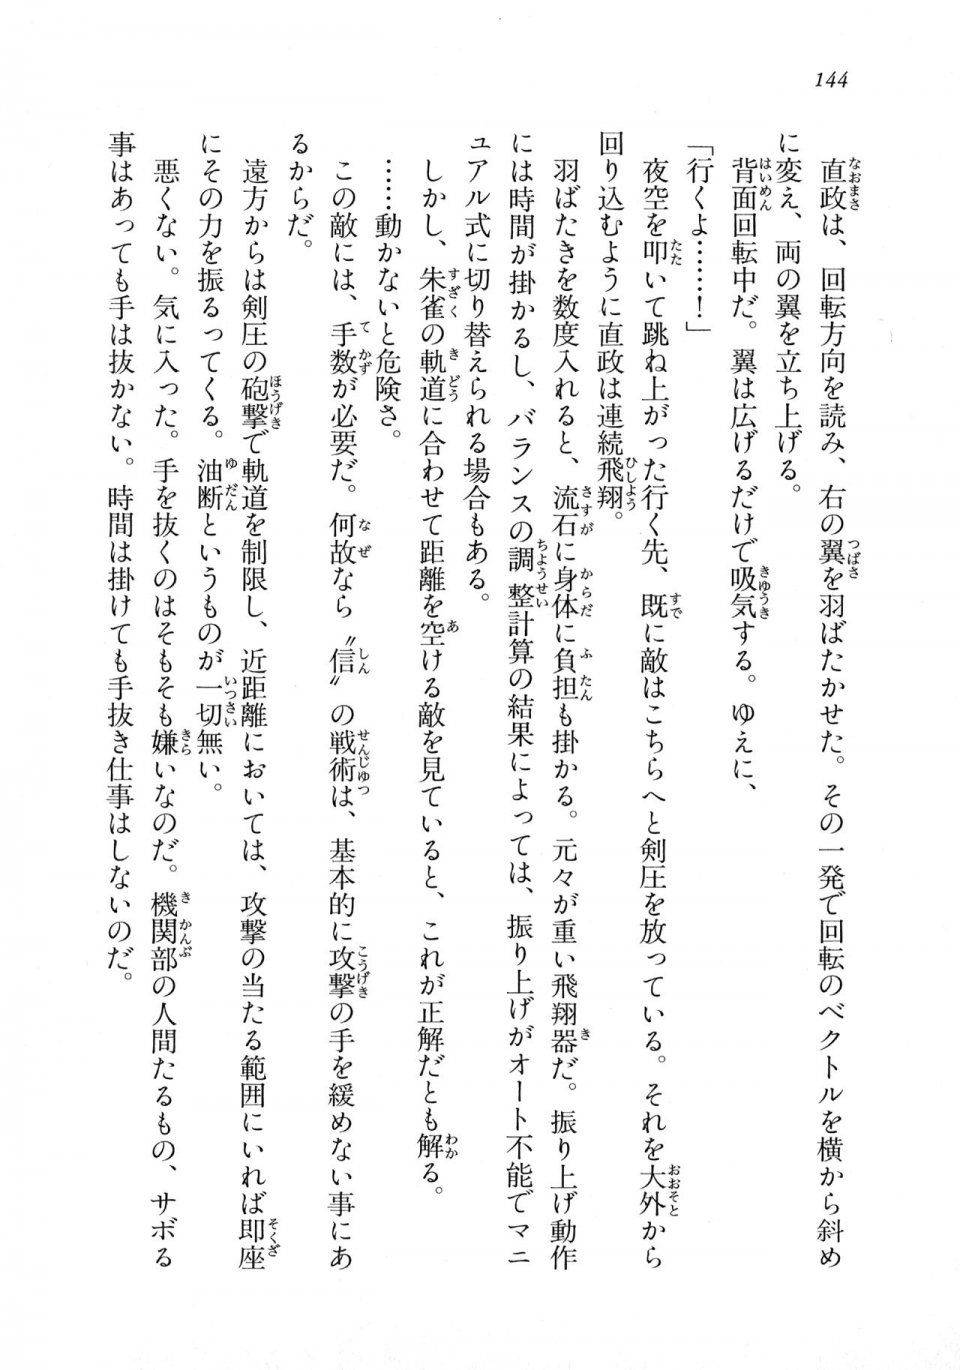 Kyoukai Senjou no Horizon LN Vol 18(7C) Part 1 - Photo #144